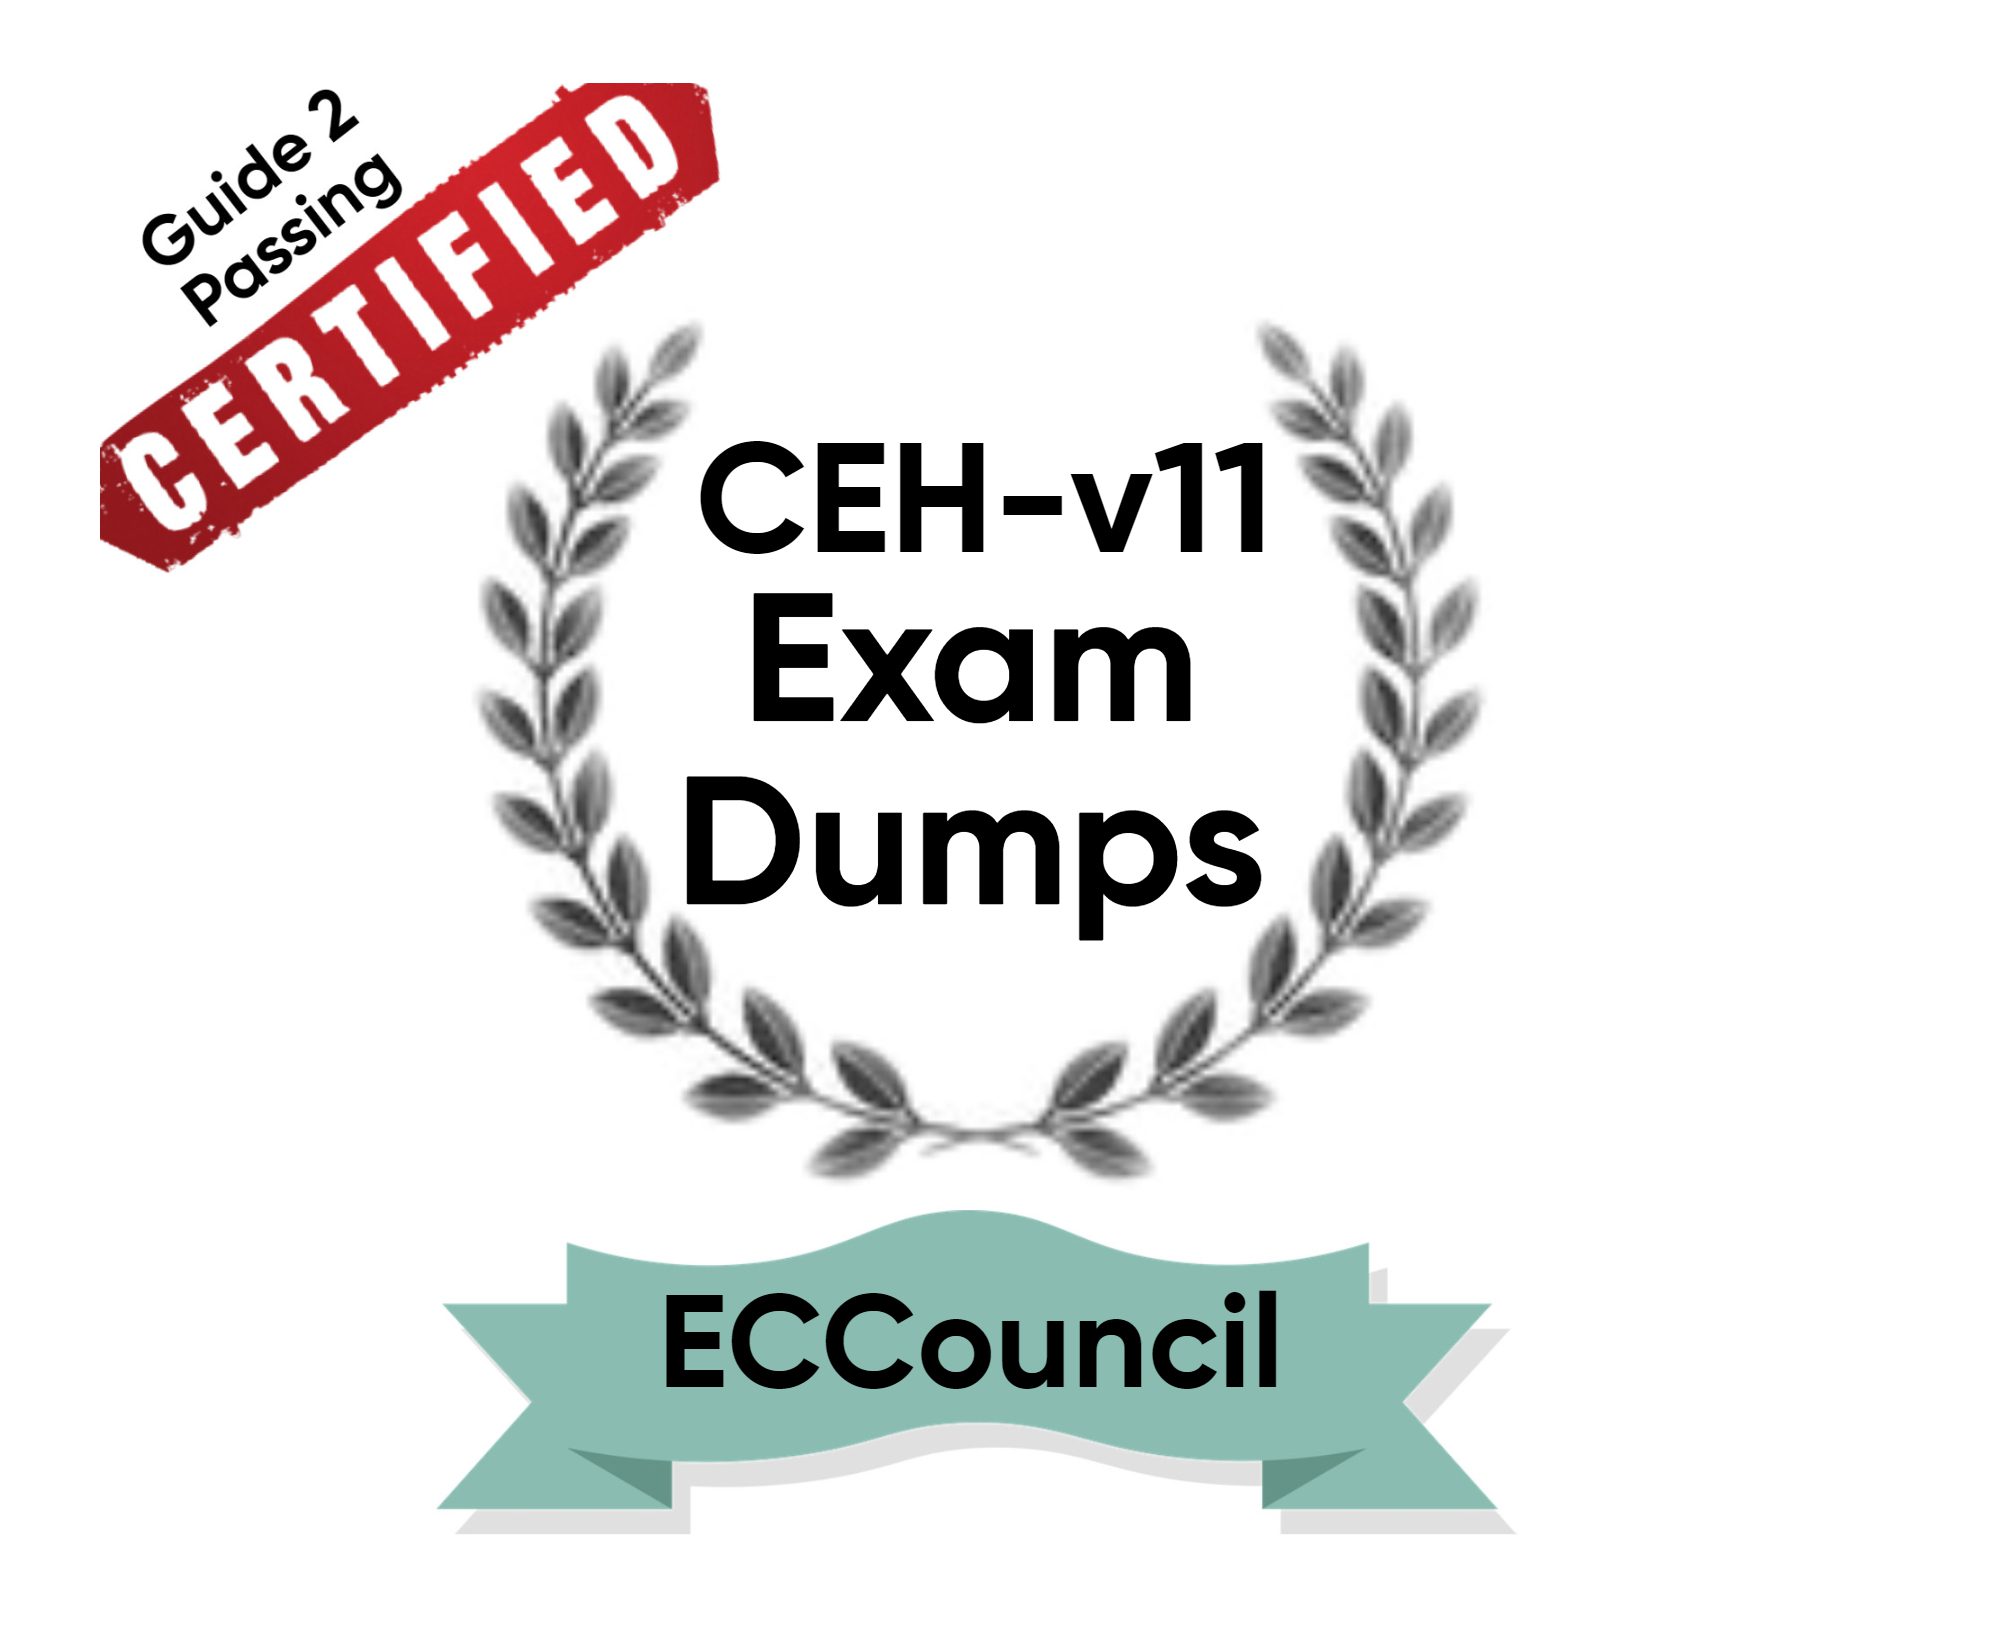 Pass Your ECCouncil CEH-v11 Exam Dumps From Guide 2 Passing